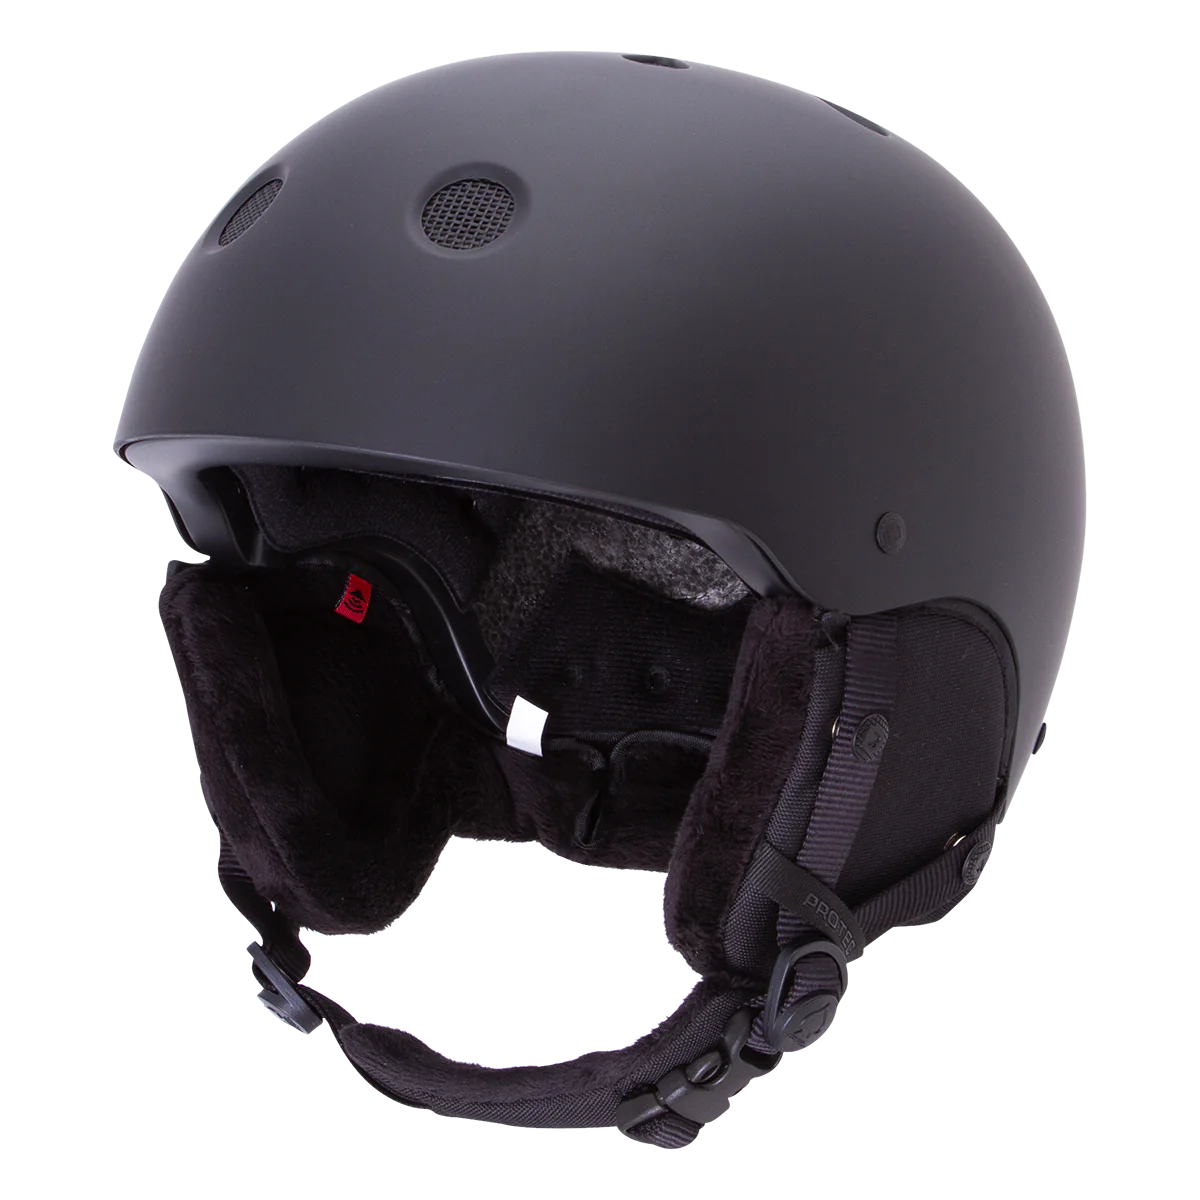 Pro-tec Classic helm stealth black